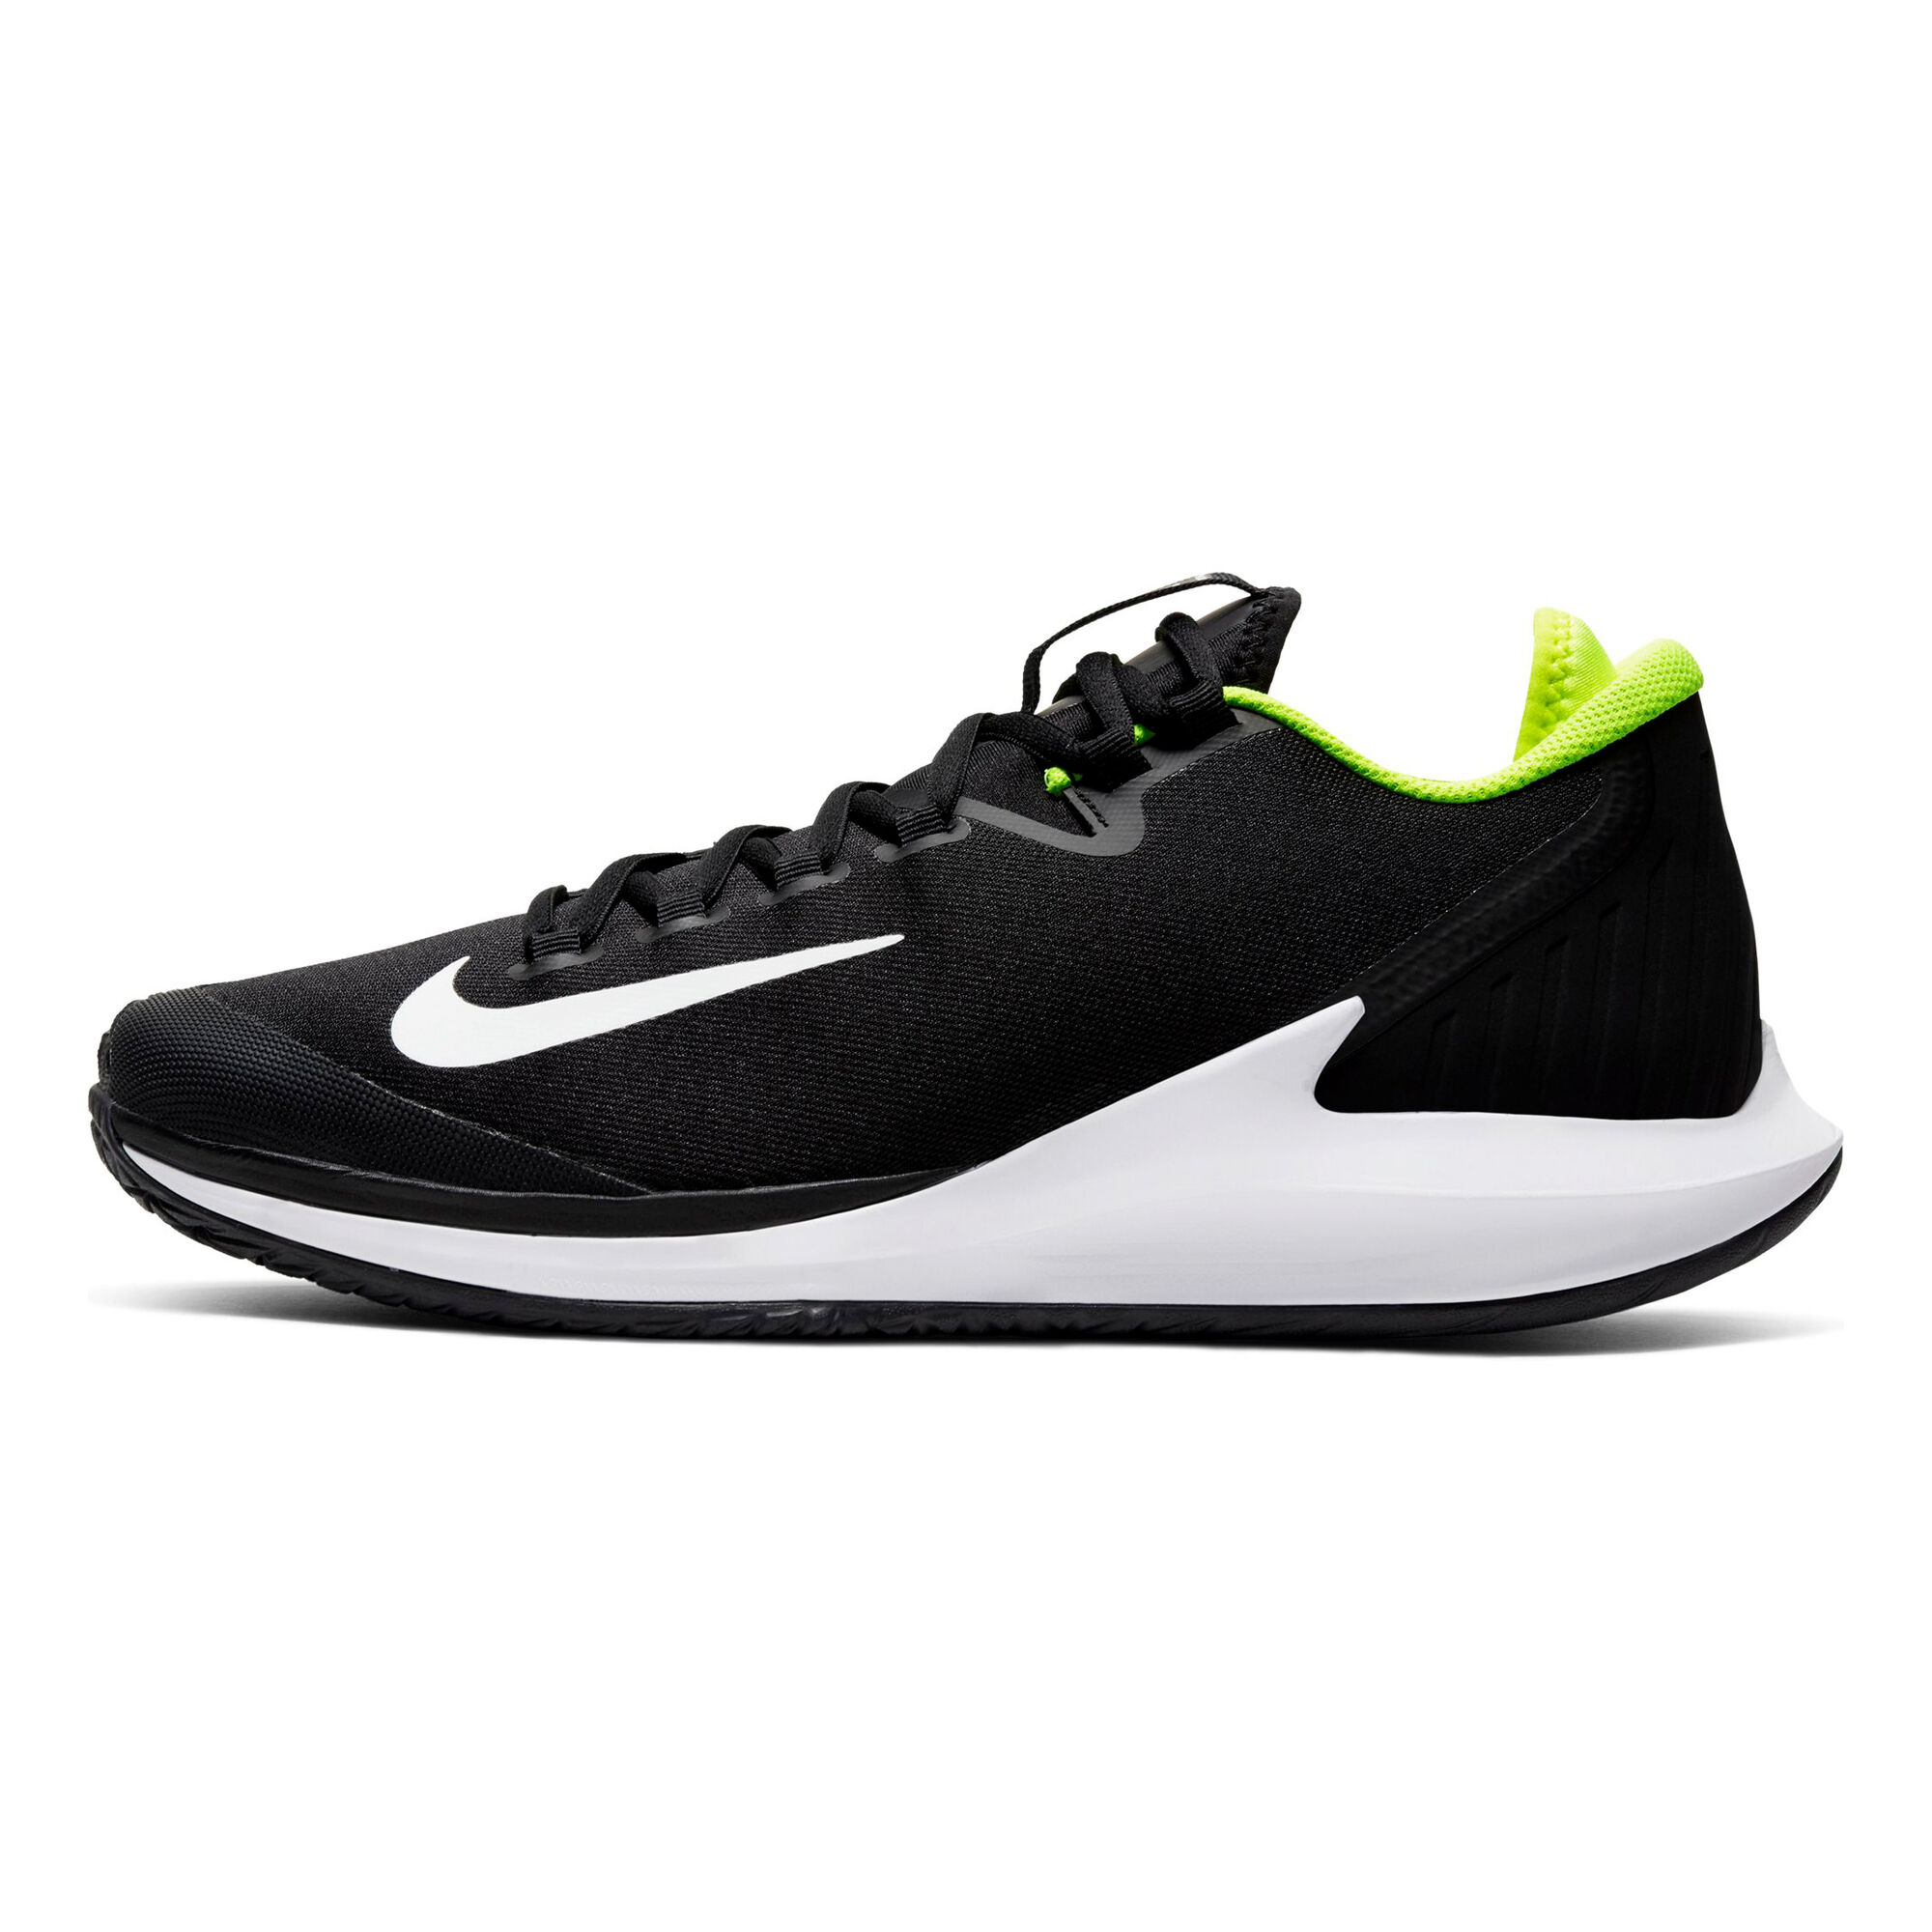 buy Nike Air Zoom Zero HC All Court Shoe Men - Black, White online | Tennis-Point